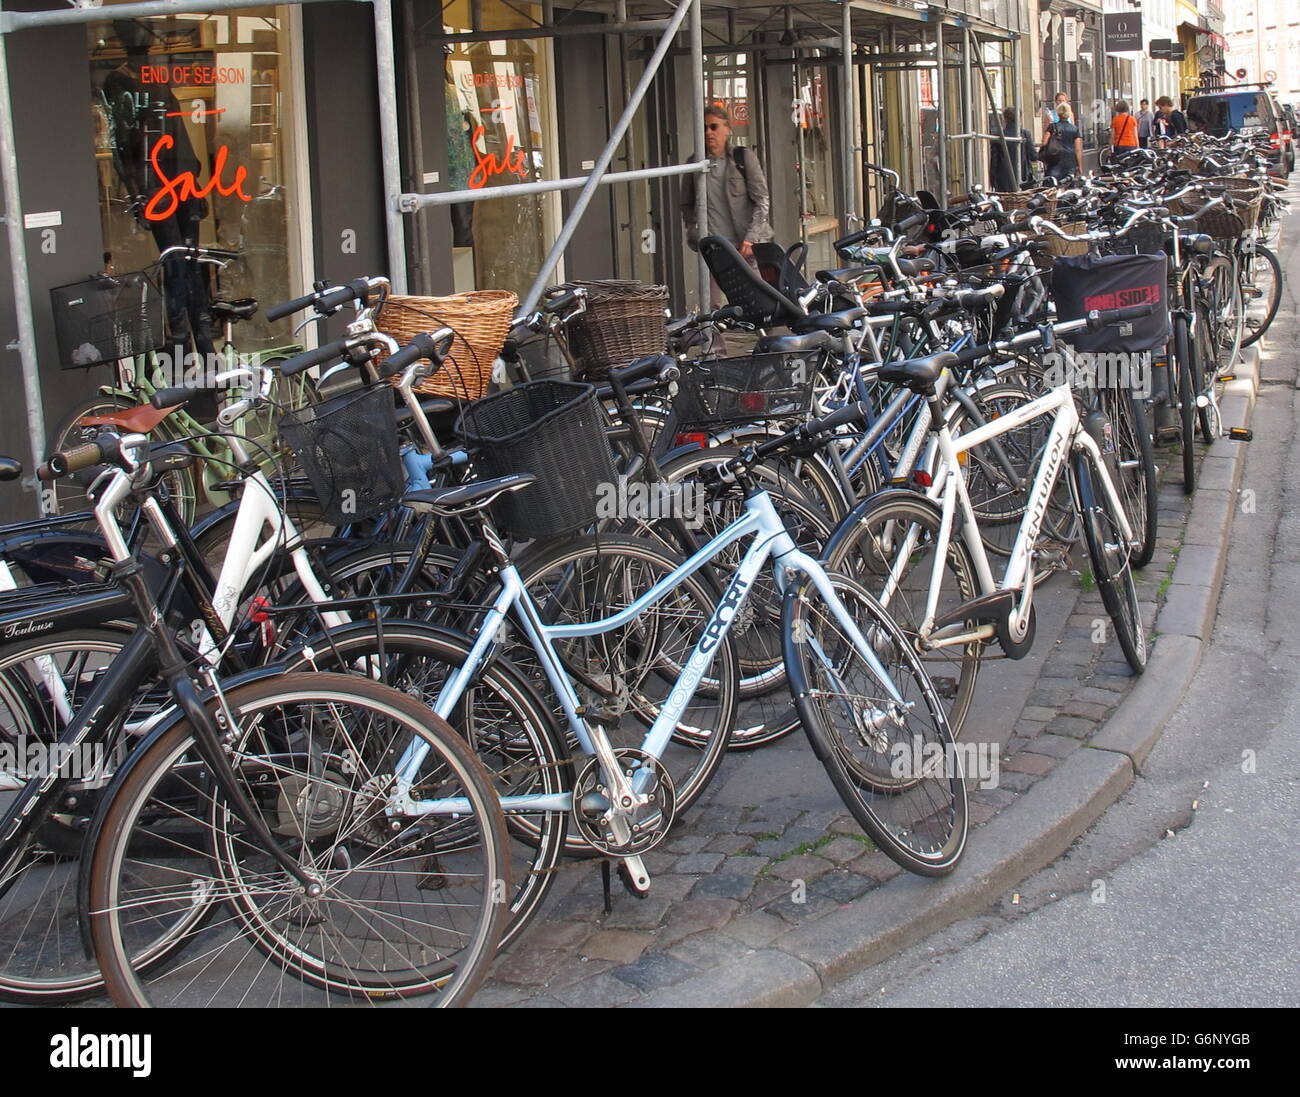 Travel pictures of Copenhagen. Bicycles parked on a street in Copenhagen, Denmark. Stock Photo